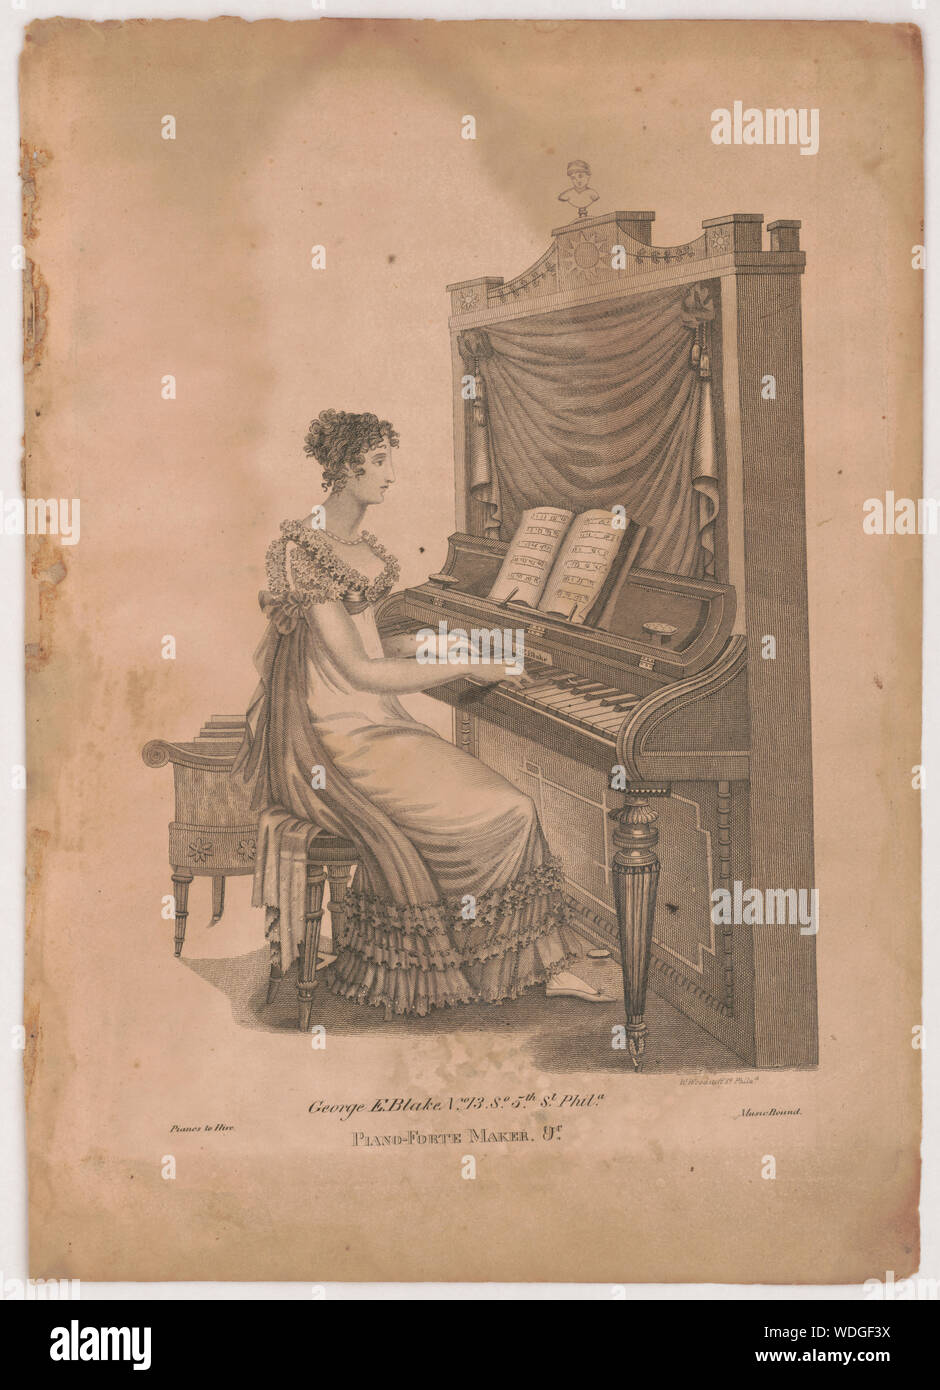 George E. Blake no. 13, So. 5th St. Phila. Piano-forte maker. &c / W. Woodruff sc. Philad. Abstract/medium: 1 print : engraving  28 x 21 cm (plate), 33 x 23.5 cm (sheet) Stock Photo